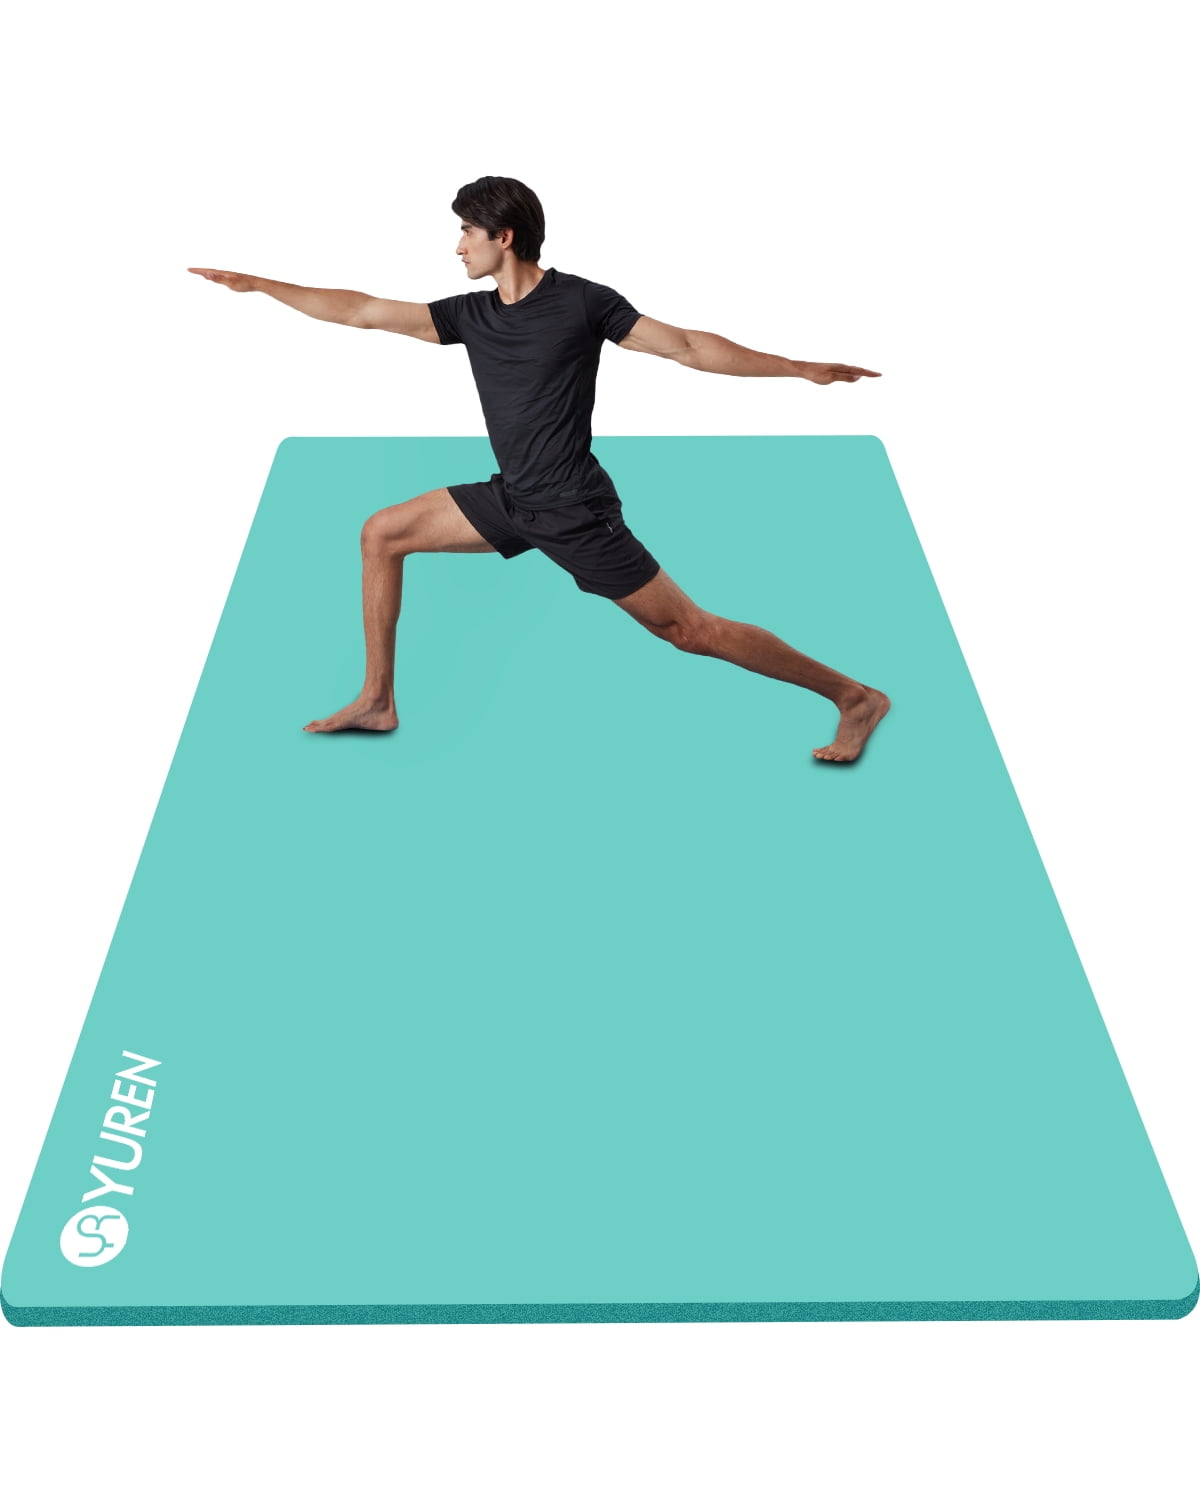 Non Slip Yoga Mat Longer And Wider Thick High Density Padding To Avoid -  Everyday Crosstrain